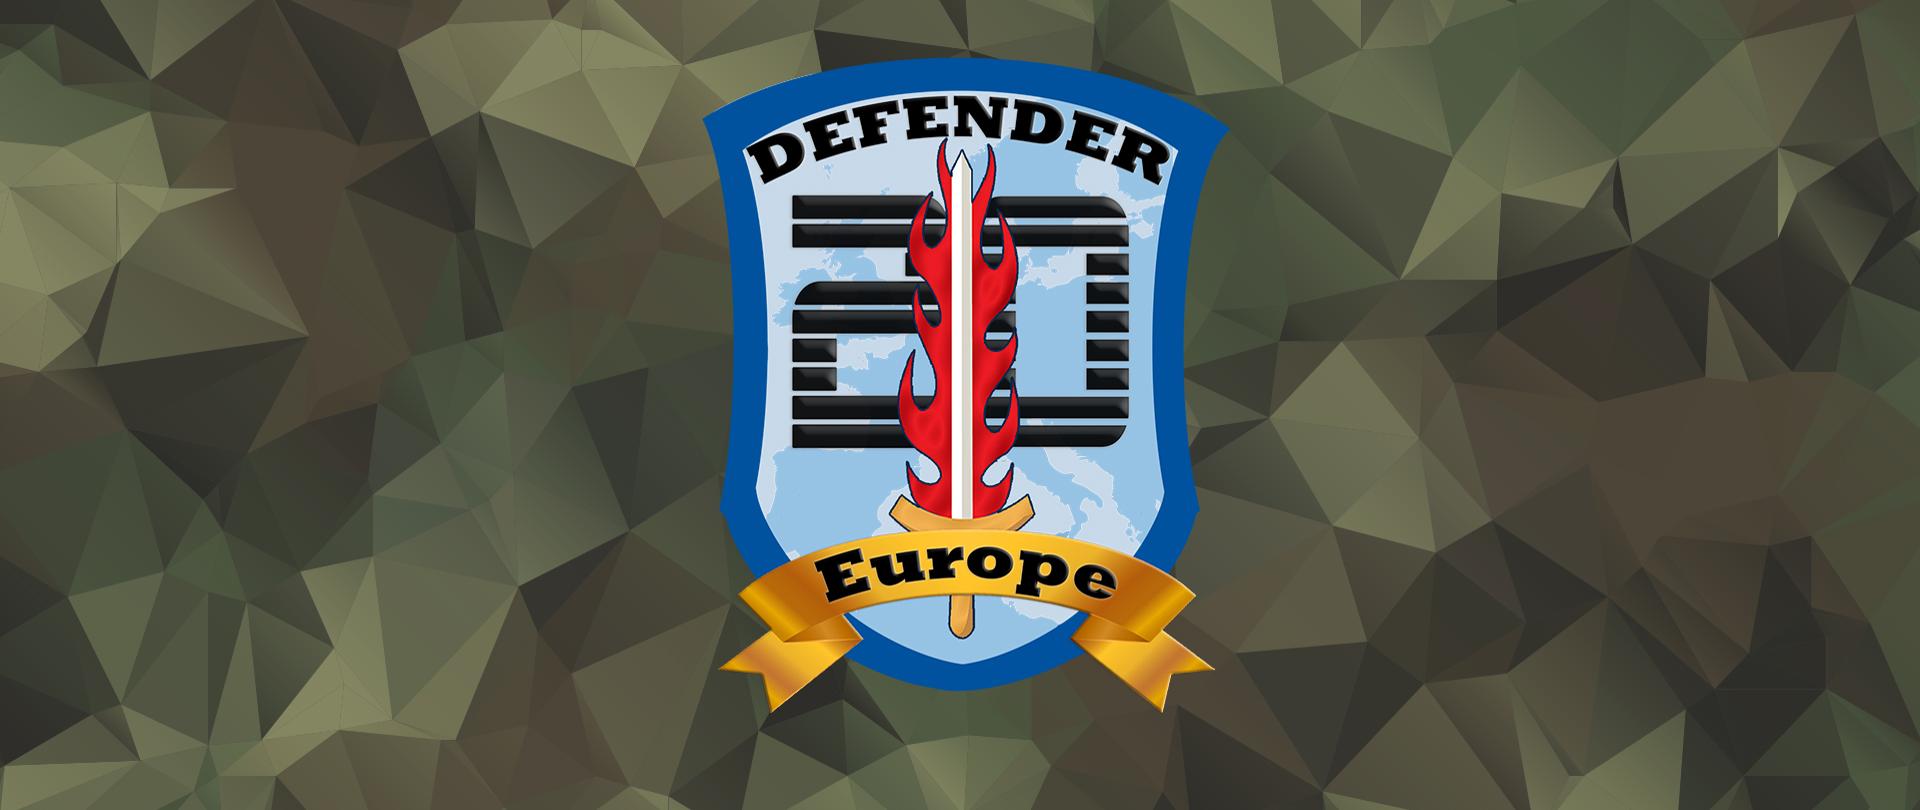 Defender Europe 20 exercise logo